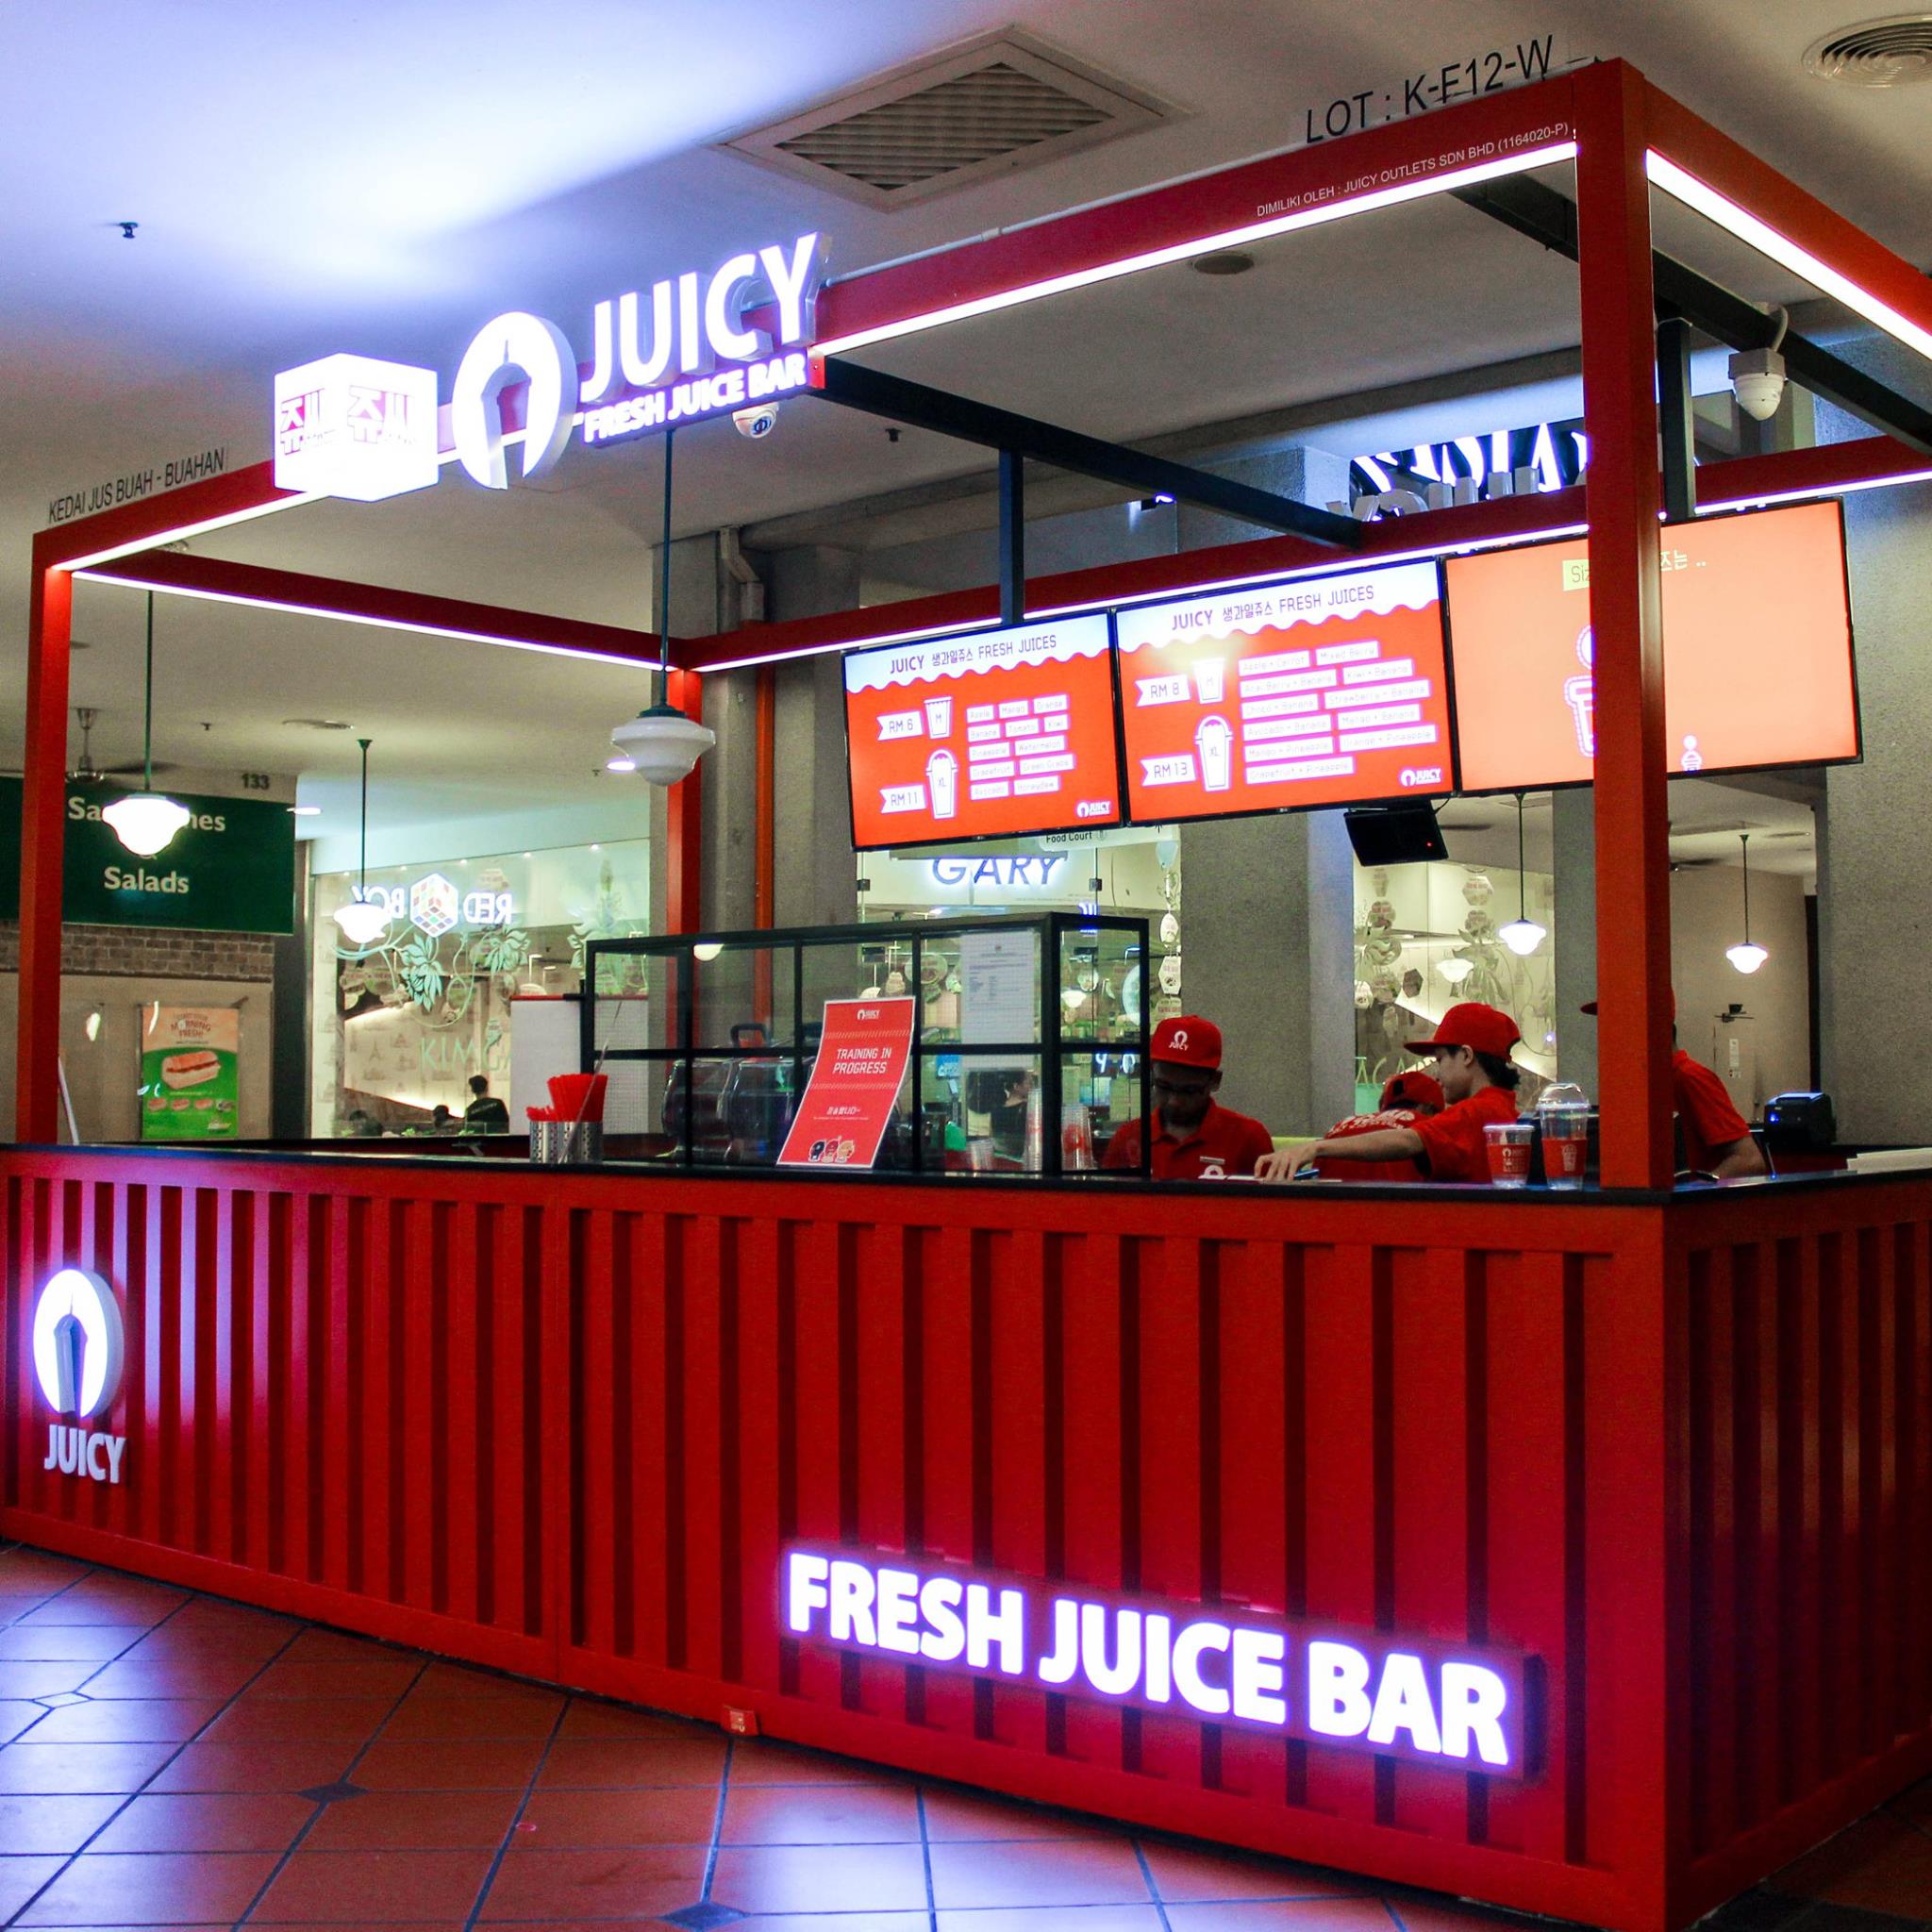 JUICY-Fresh-Juice-Bar-booth-example-Malaysia